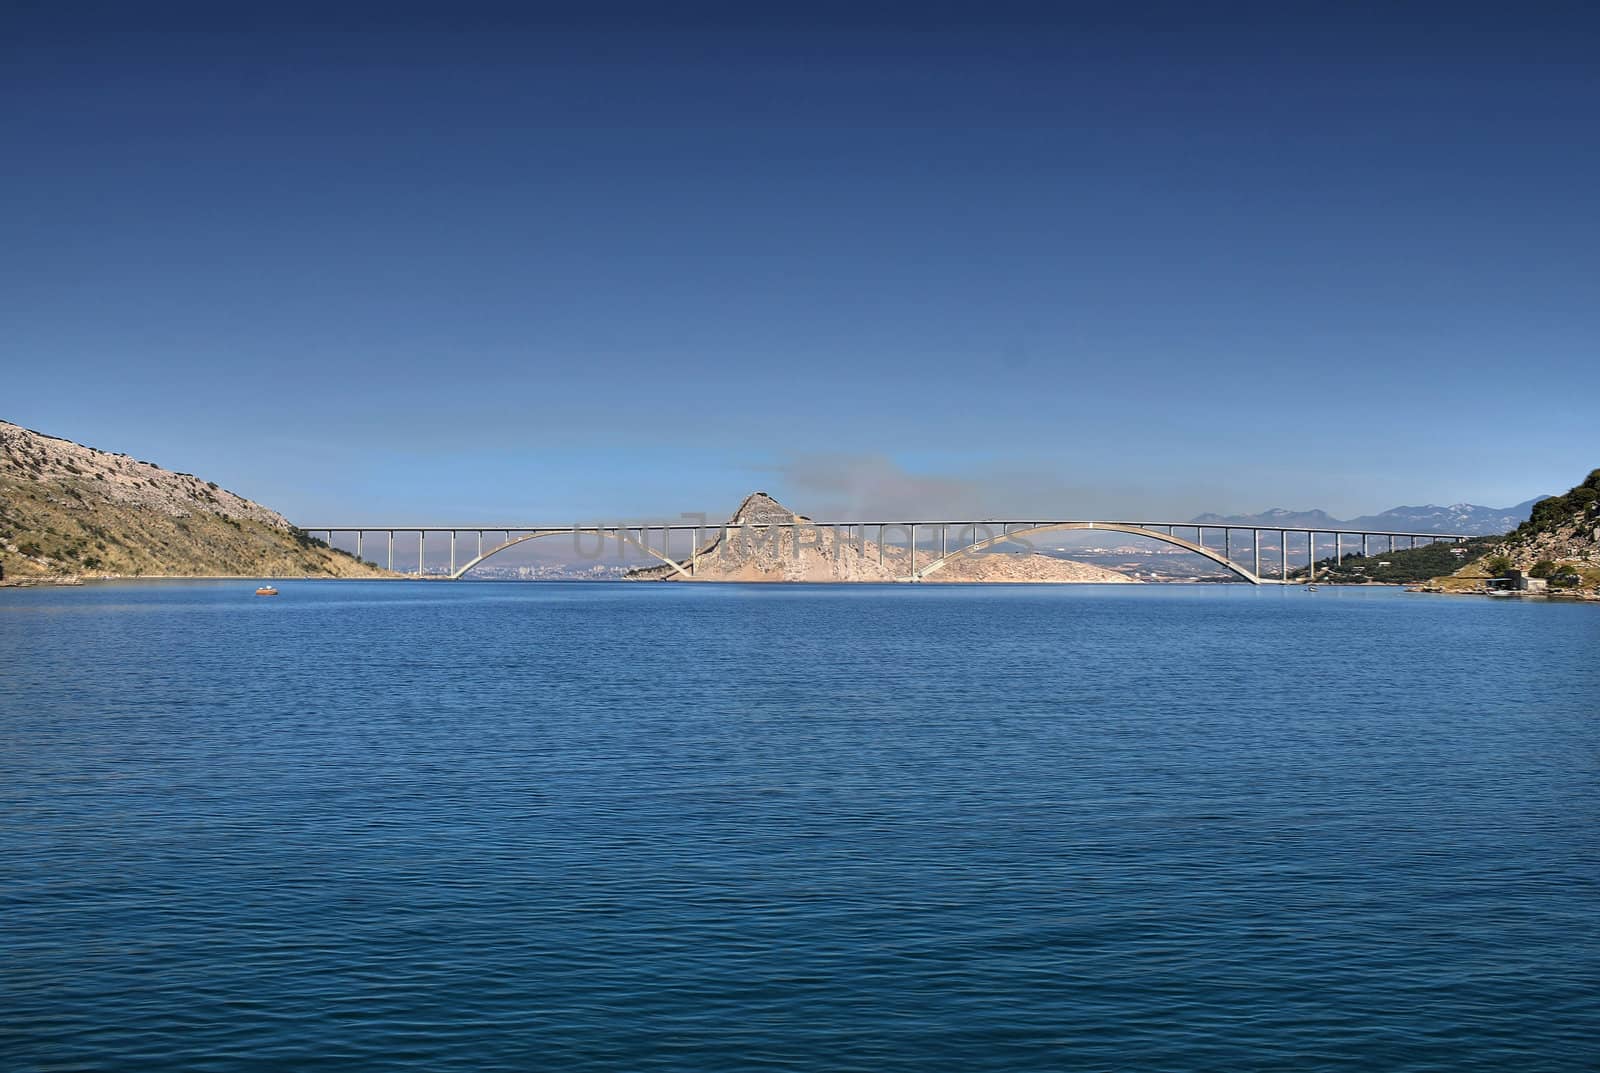 Island of Krk bridge over Sea by xbrchx